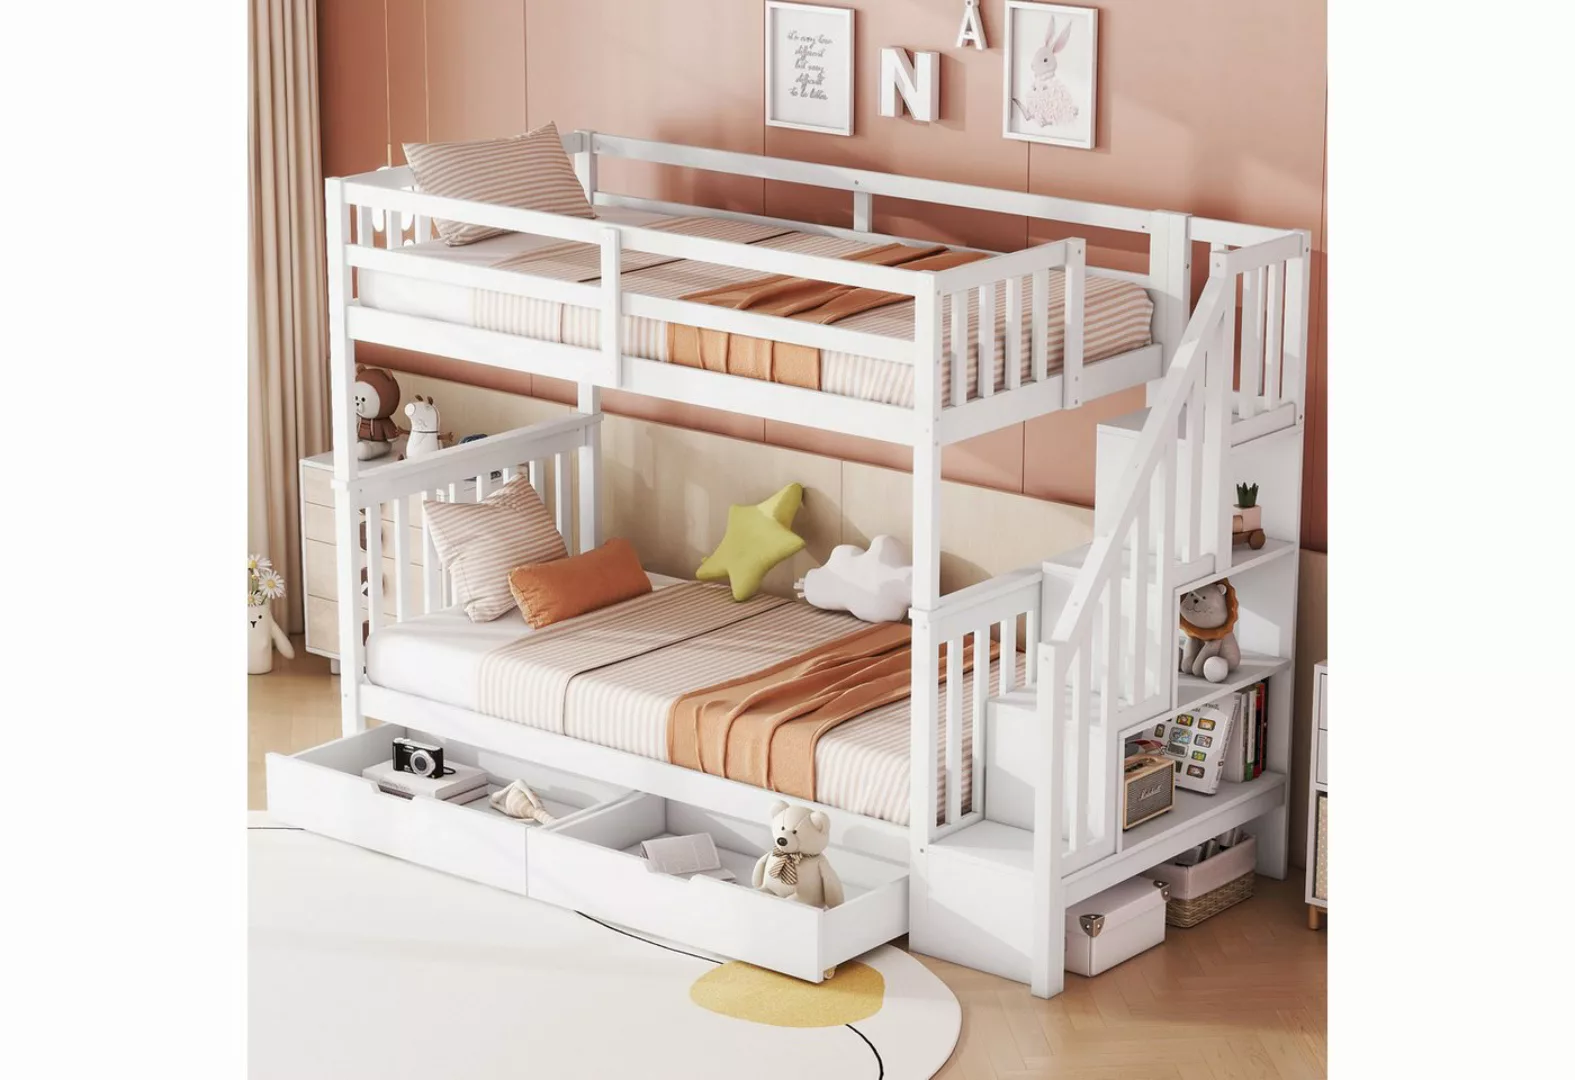 TavilaEcon Etagenbett Kinderbett Jugendbett mit Treppenregal, hohe Geländer günstig online kaufen